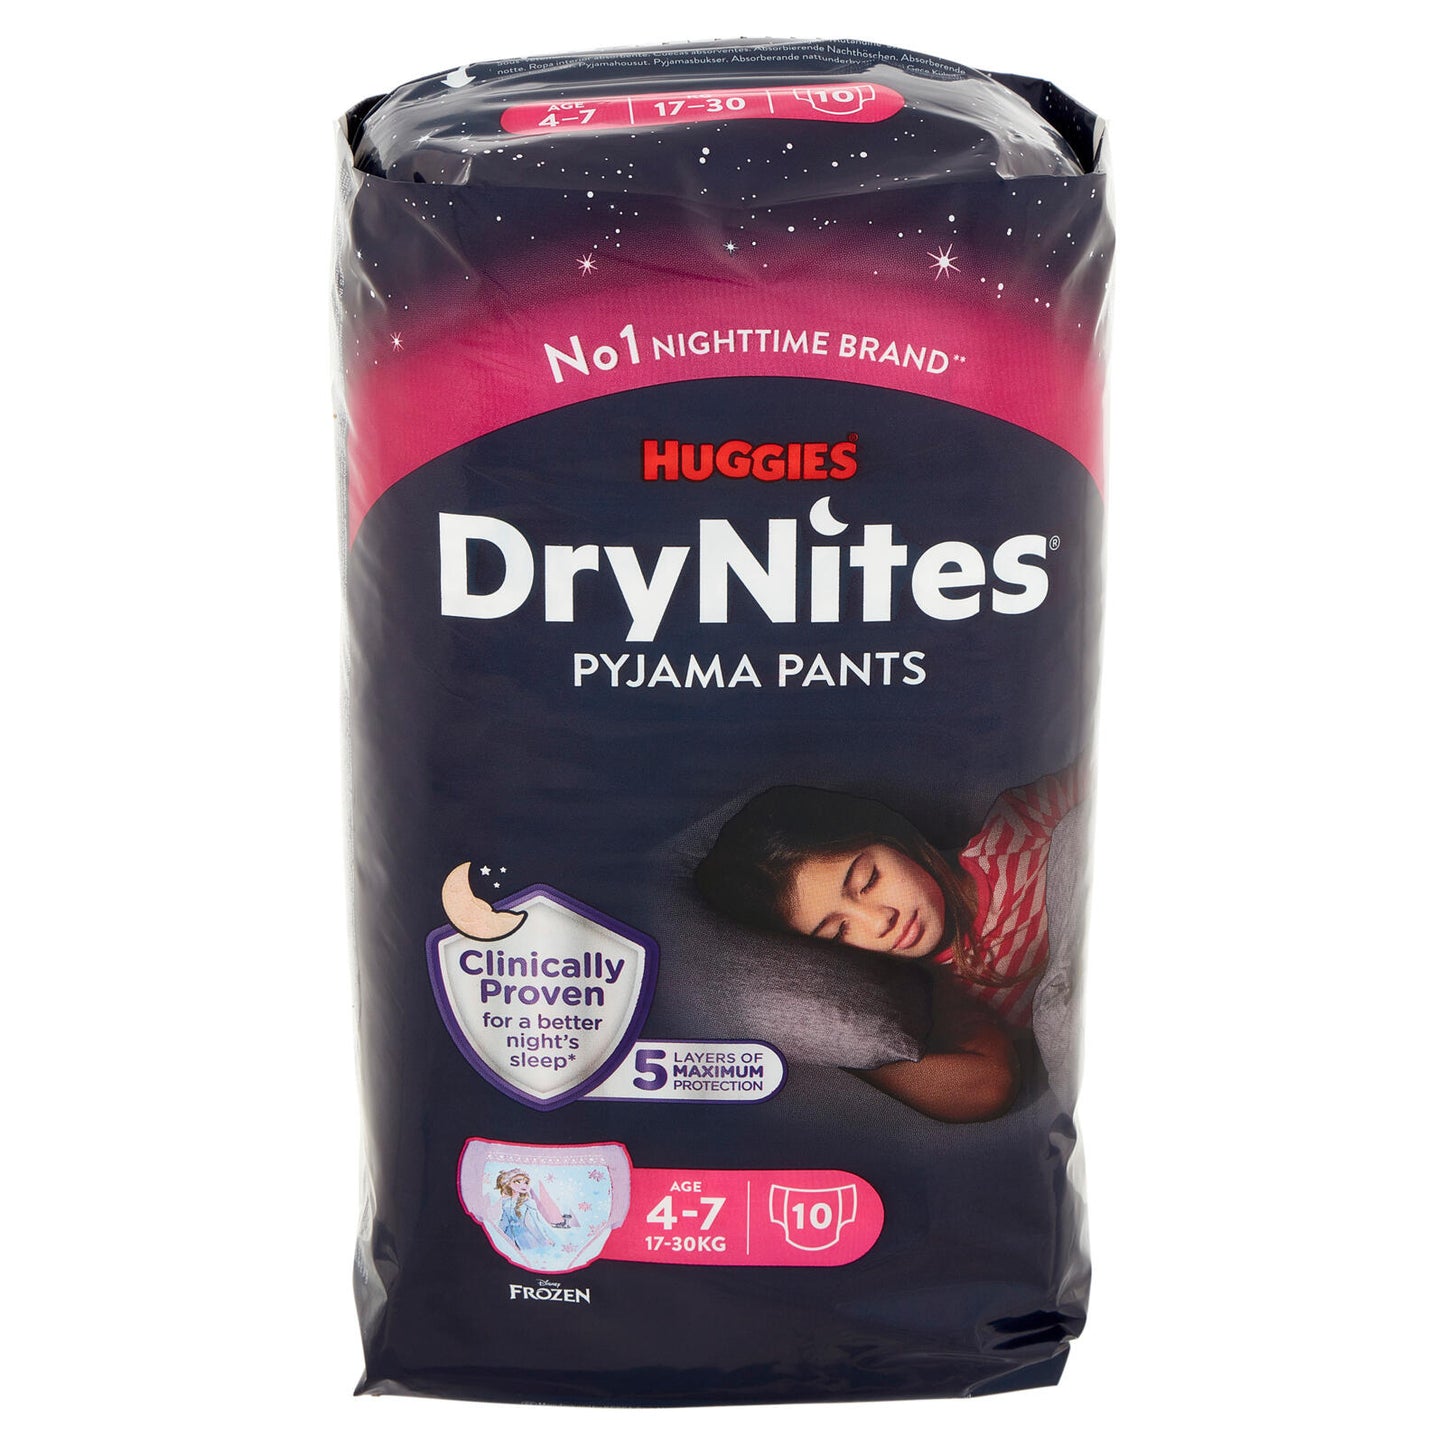 Huggies DryNites Pyjama Pants Age 4-7 17-30 Kg 10 pz